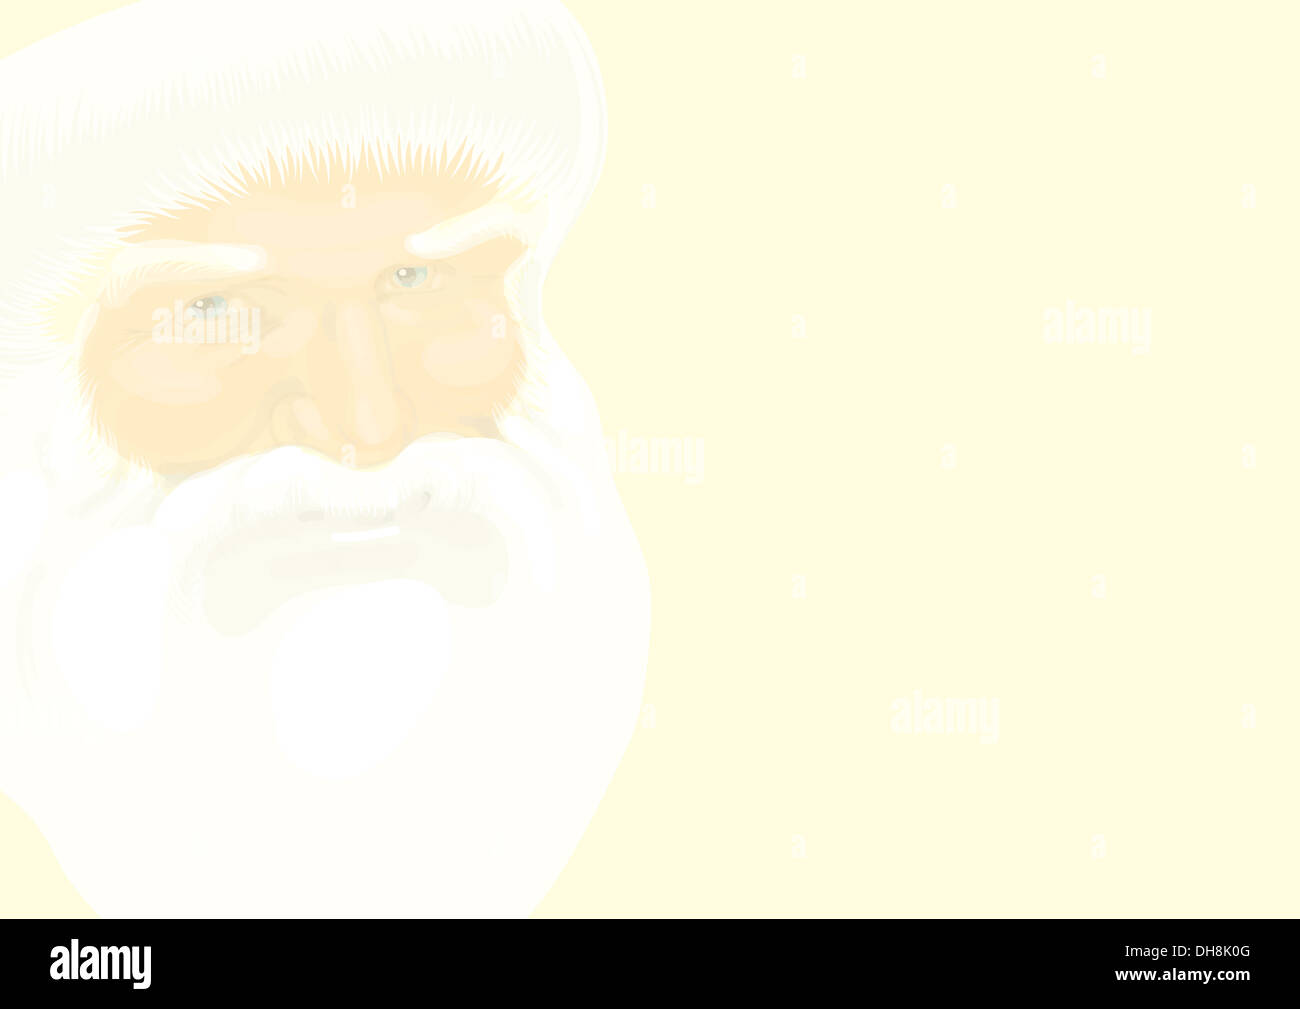 Father Christmas illustration,  retro style, light shades, horizontal size, realistic manner of the image Stock Photo